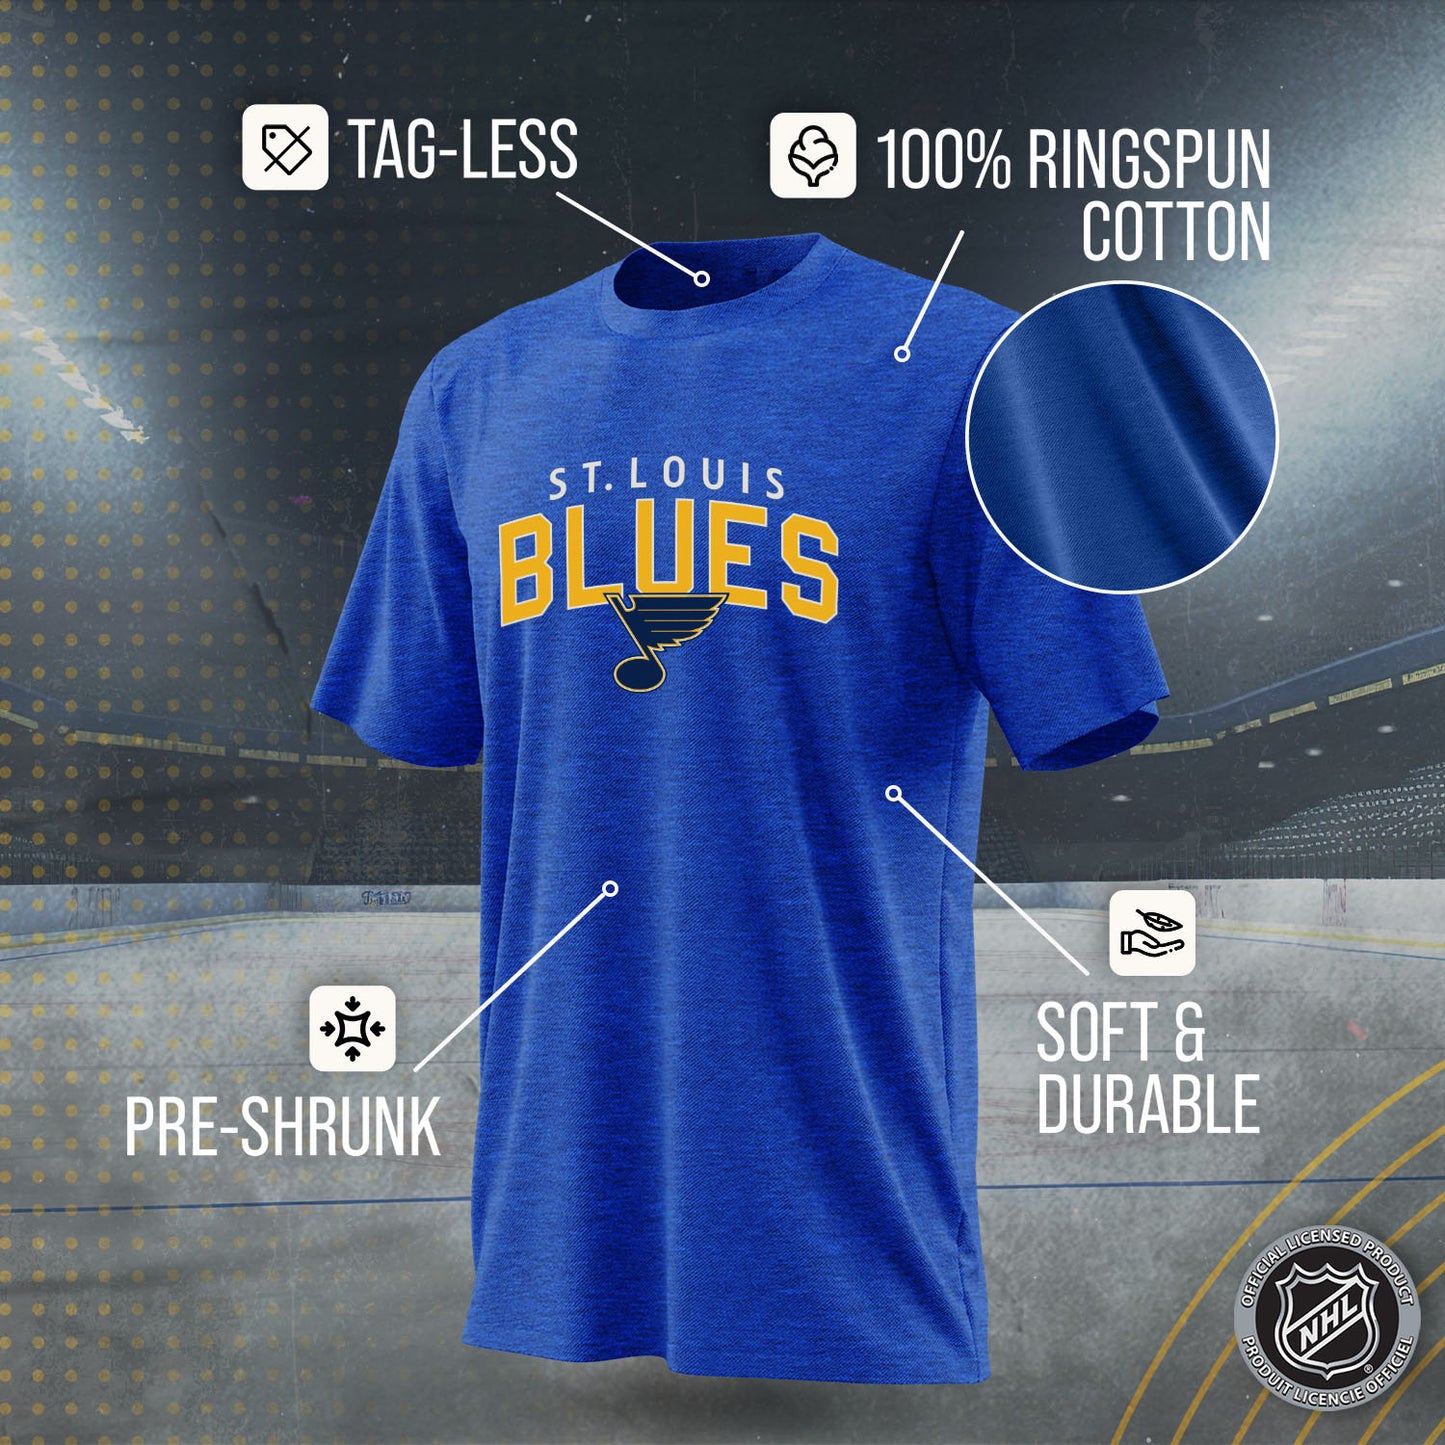 St. Louis Blues NHL Adult Powerplay Heathered Unisex T-Shirt - Royal